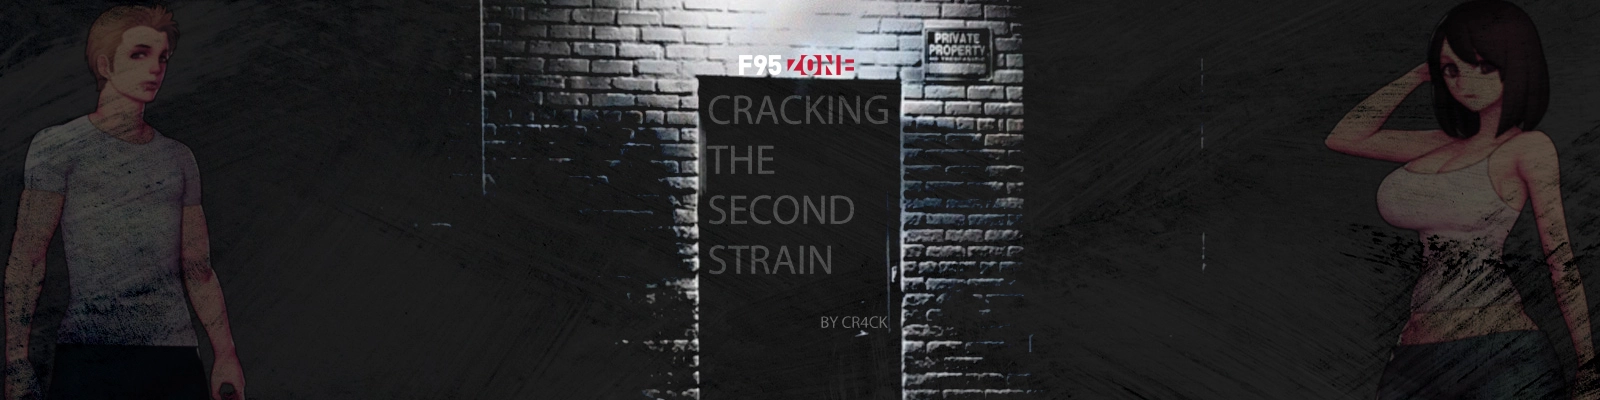 Cracking: The Second Strain [v0.2.30 Public] main image